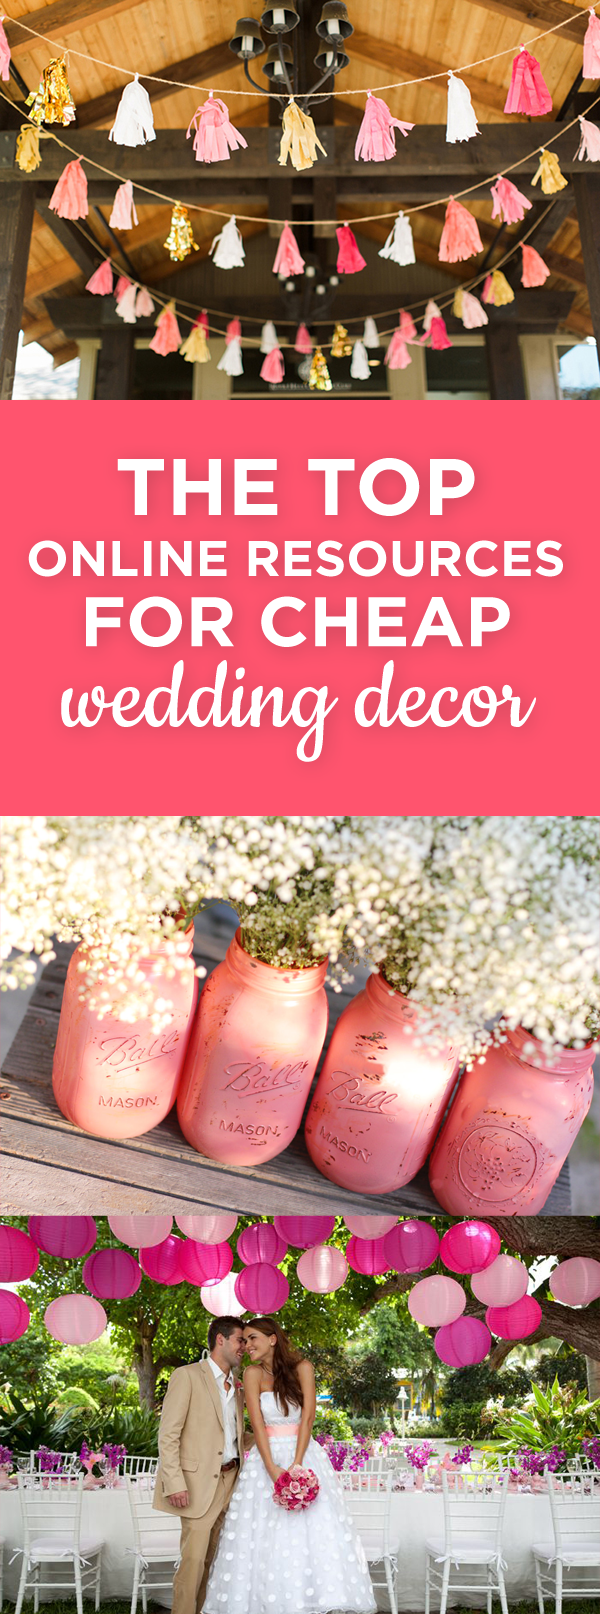 sources for cheap wedding decor